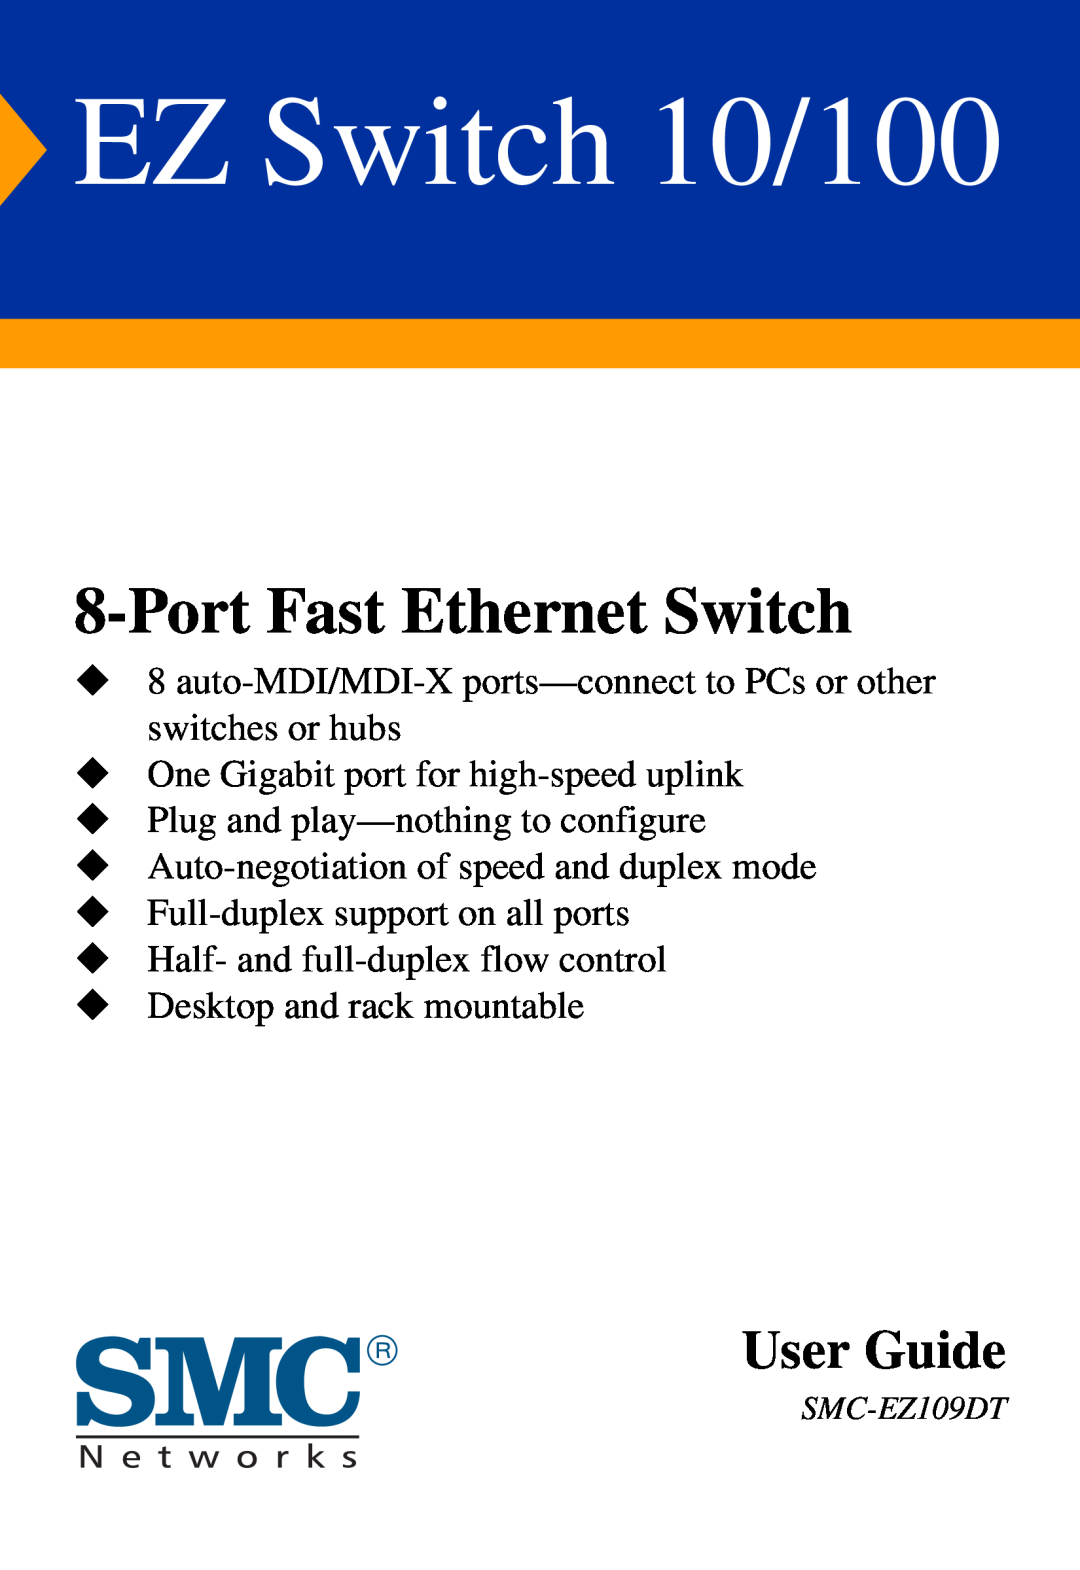 SMC Networks SMC-EZ1024DT manual Port Fast Ethernet Switch, EZ Switch 10/100, User Guide, Desktop and rack mountable 